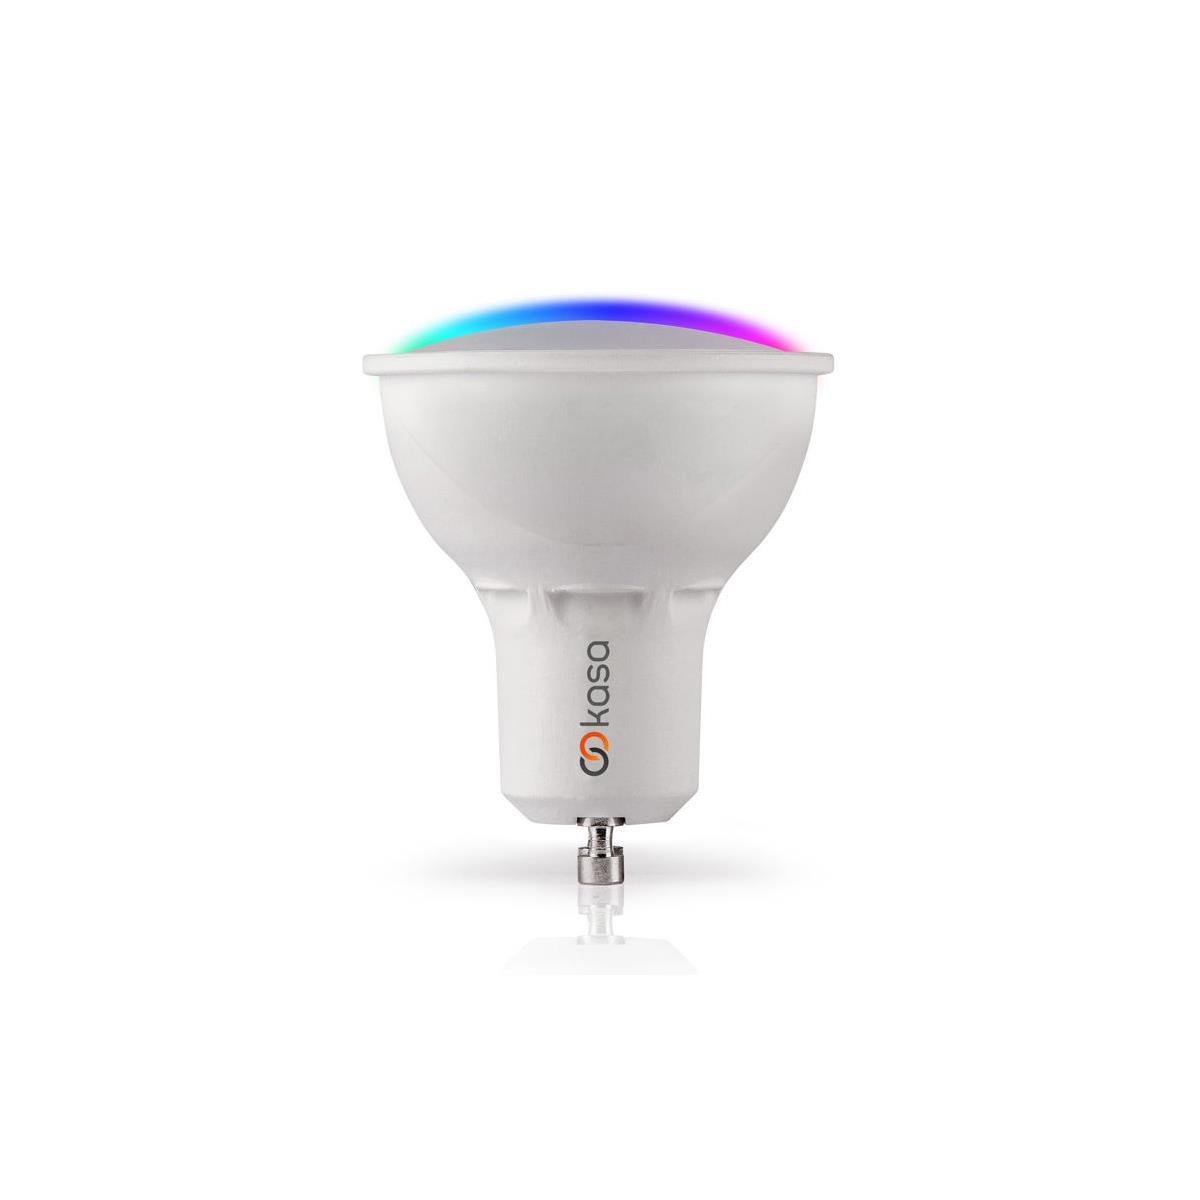 Image of Veho Kasa Bluetooth Smart LED Light Bulb